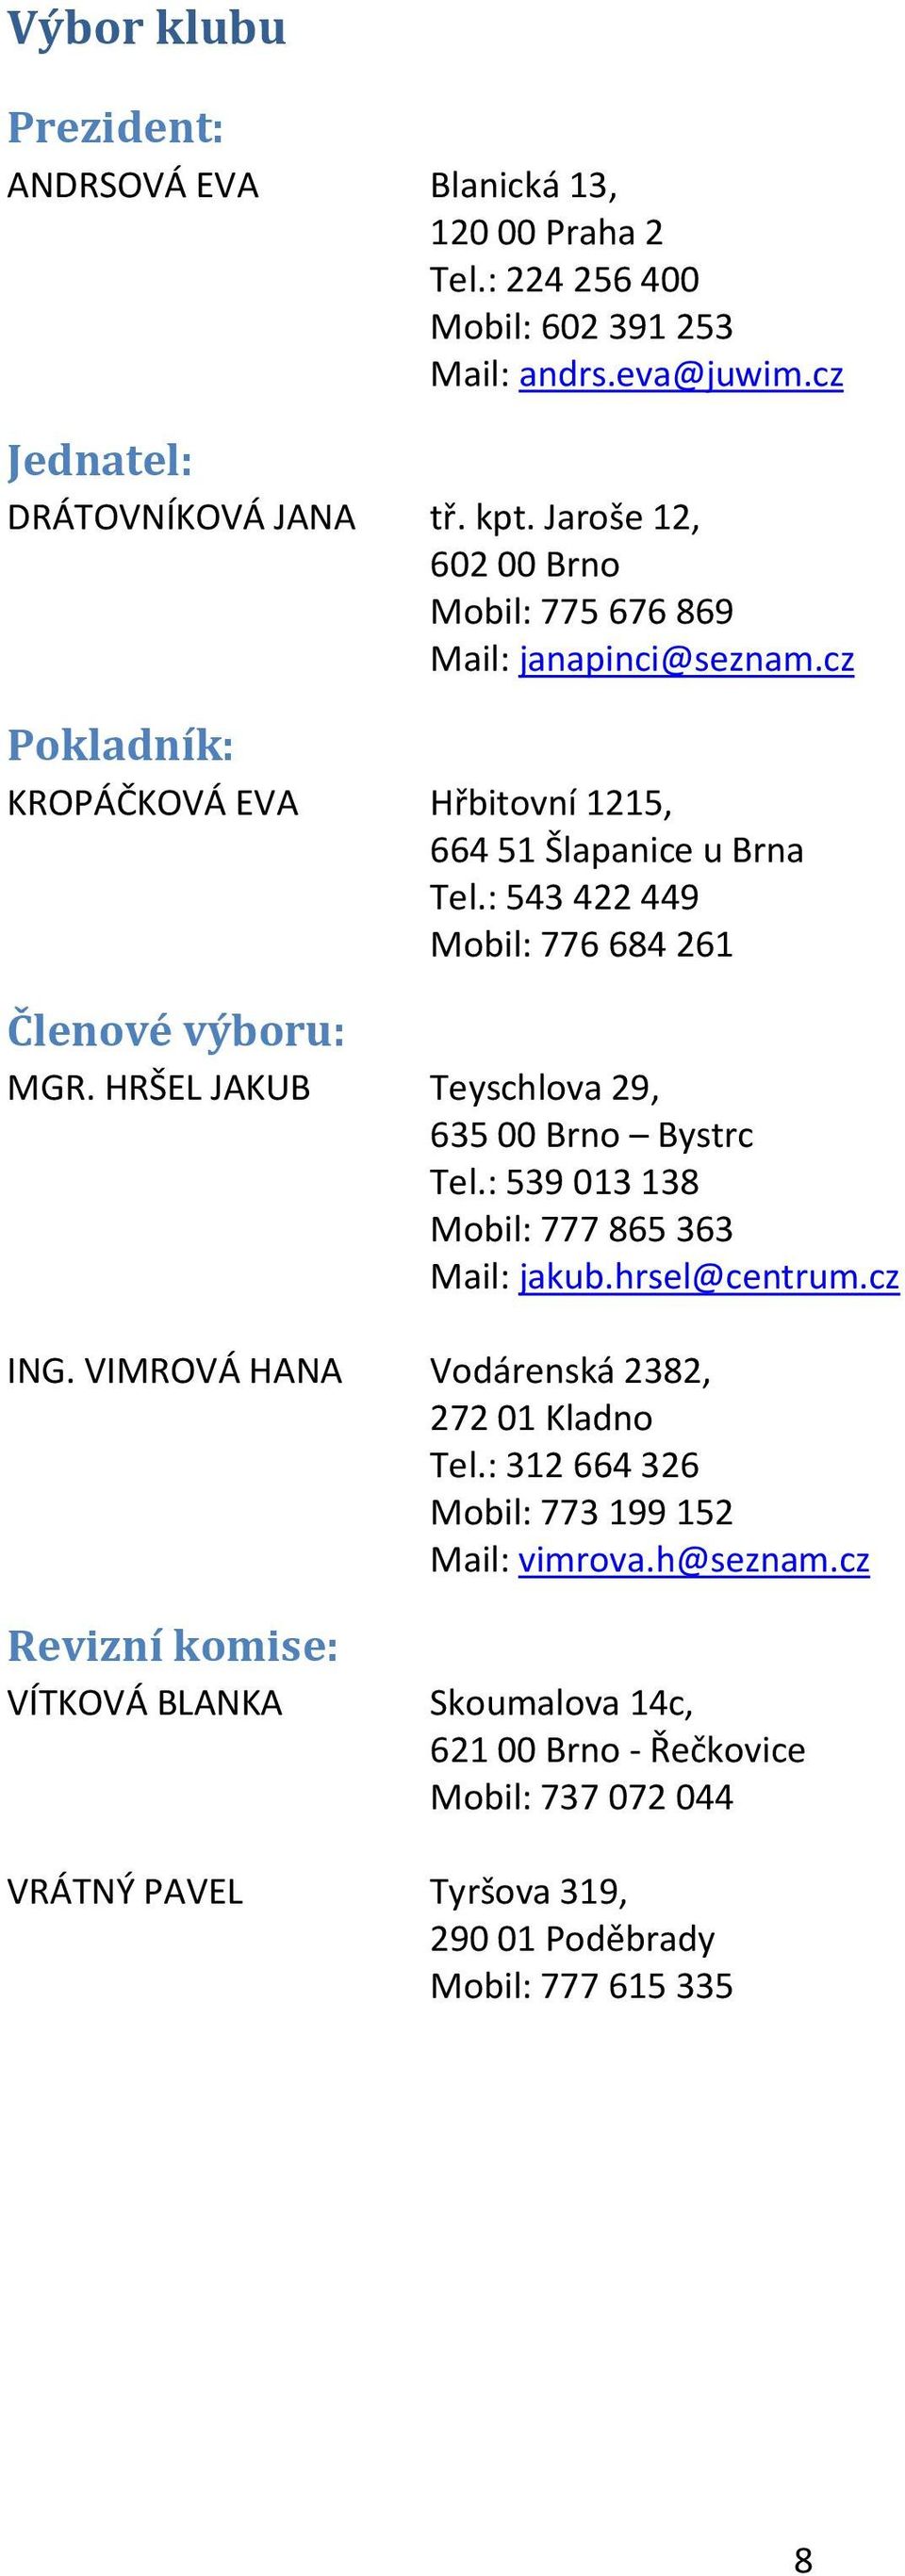 : 543 422 449 Mobil: 776 684 261 Členové výboru: MGR. HRŠEL JAKUB Teyschlova 29, 635 00 Brno Bystrc Tel.: 539 013 138 Mobil: 777 865 363 Mail: jakub.hrsel@centrum.cz ING.